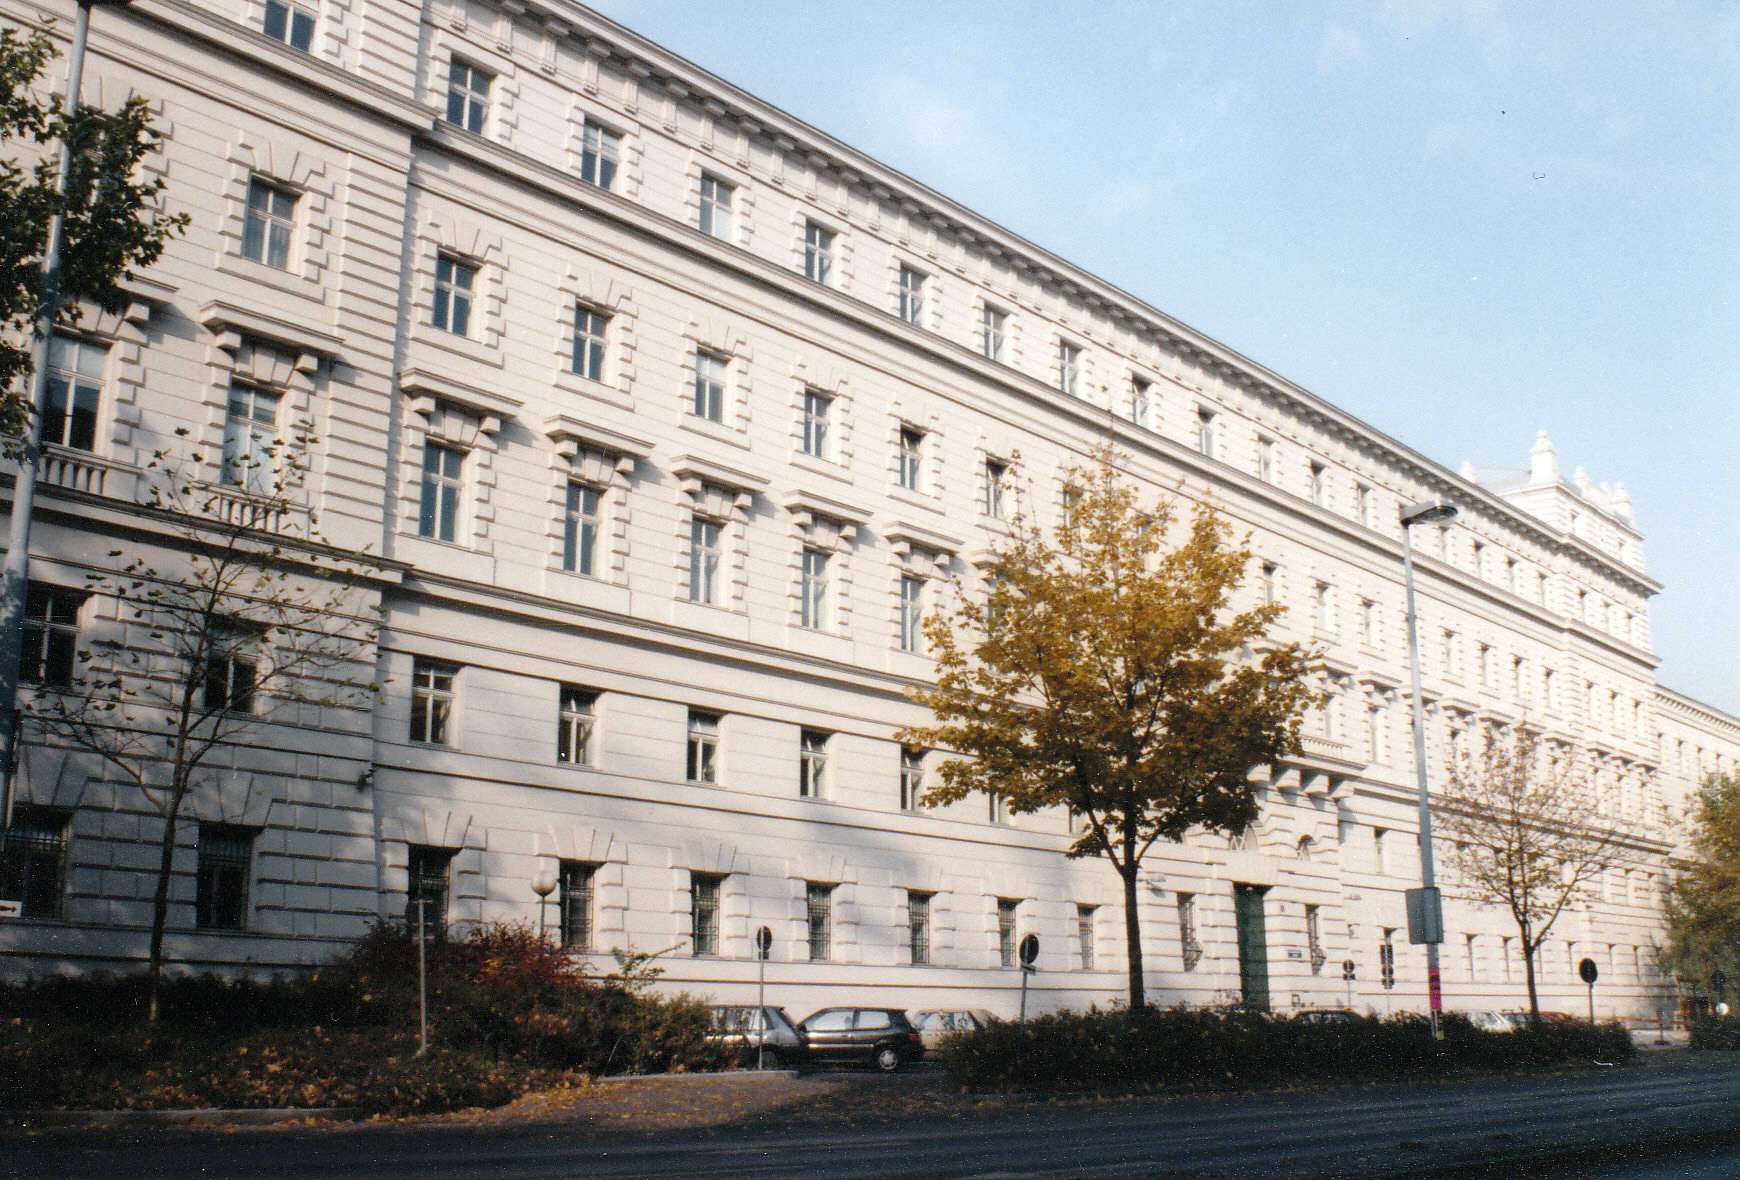 Foto: Fassade Landesgericht Wien